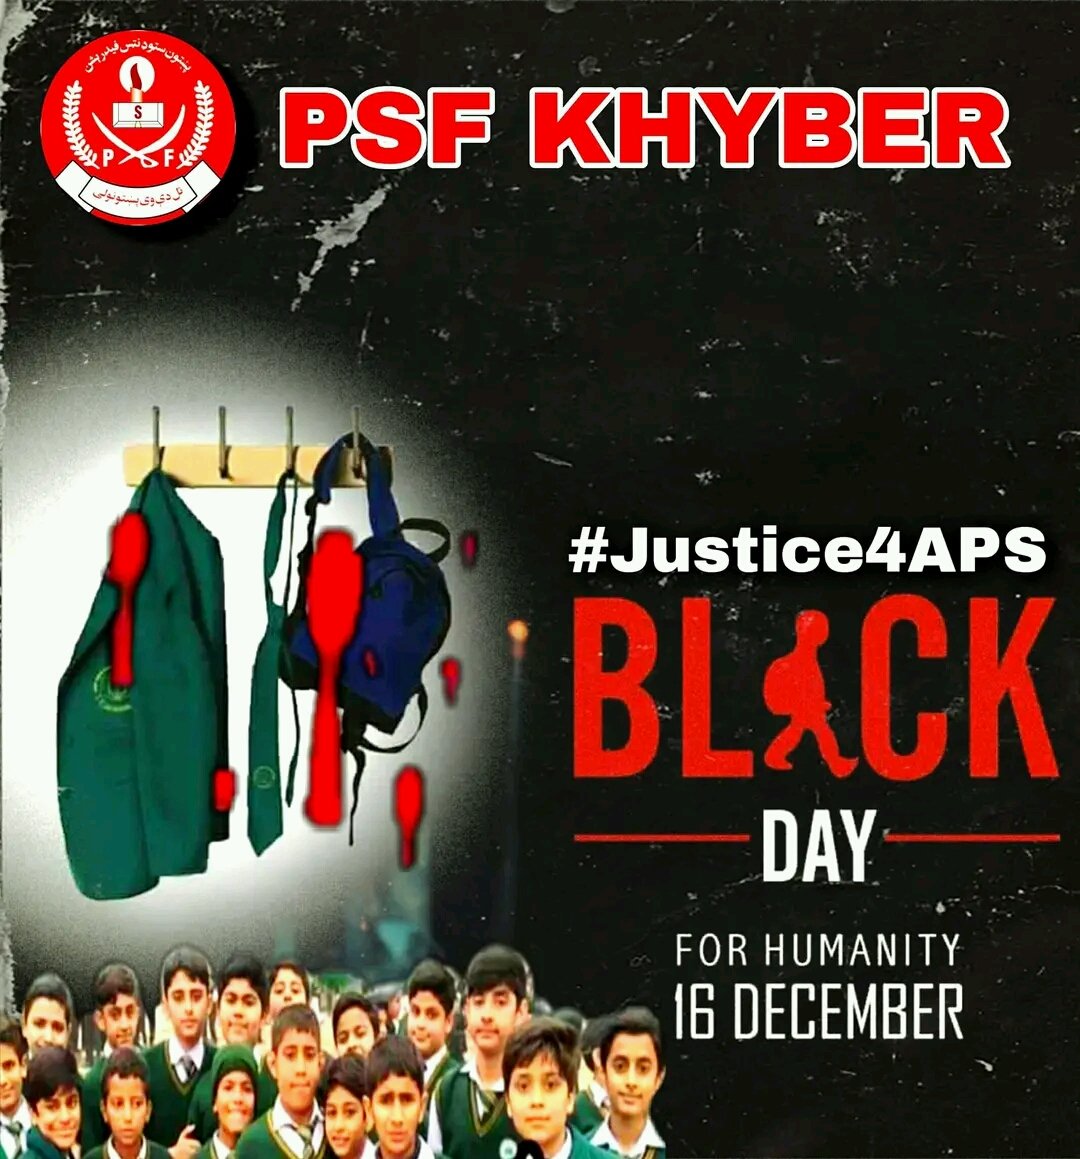 #BlackDay16December

#Justice4APS

#PSFkhyber